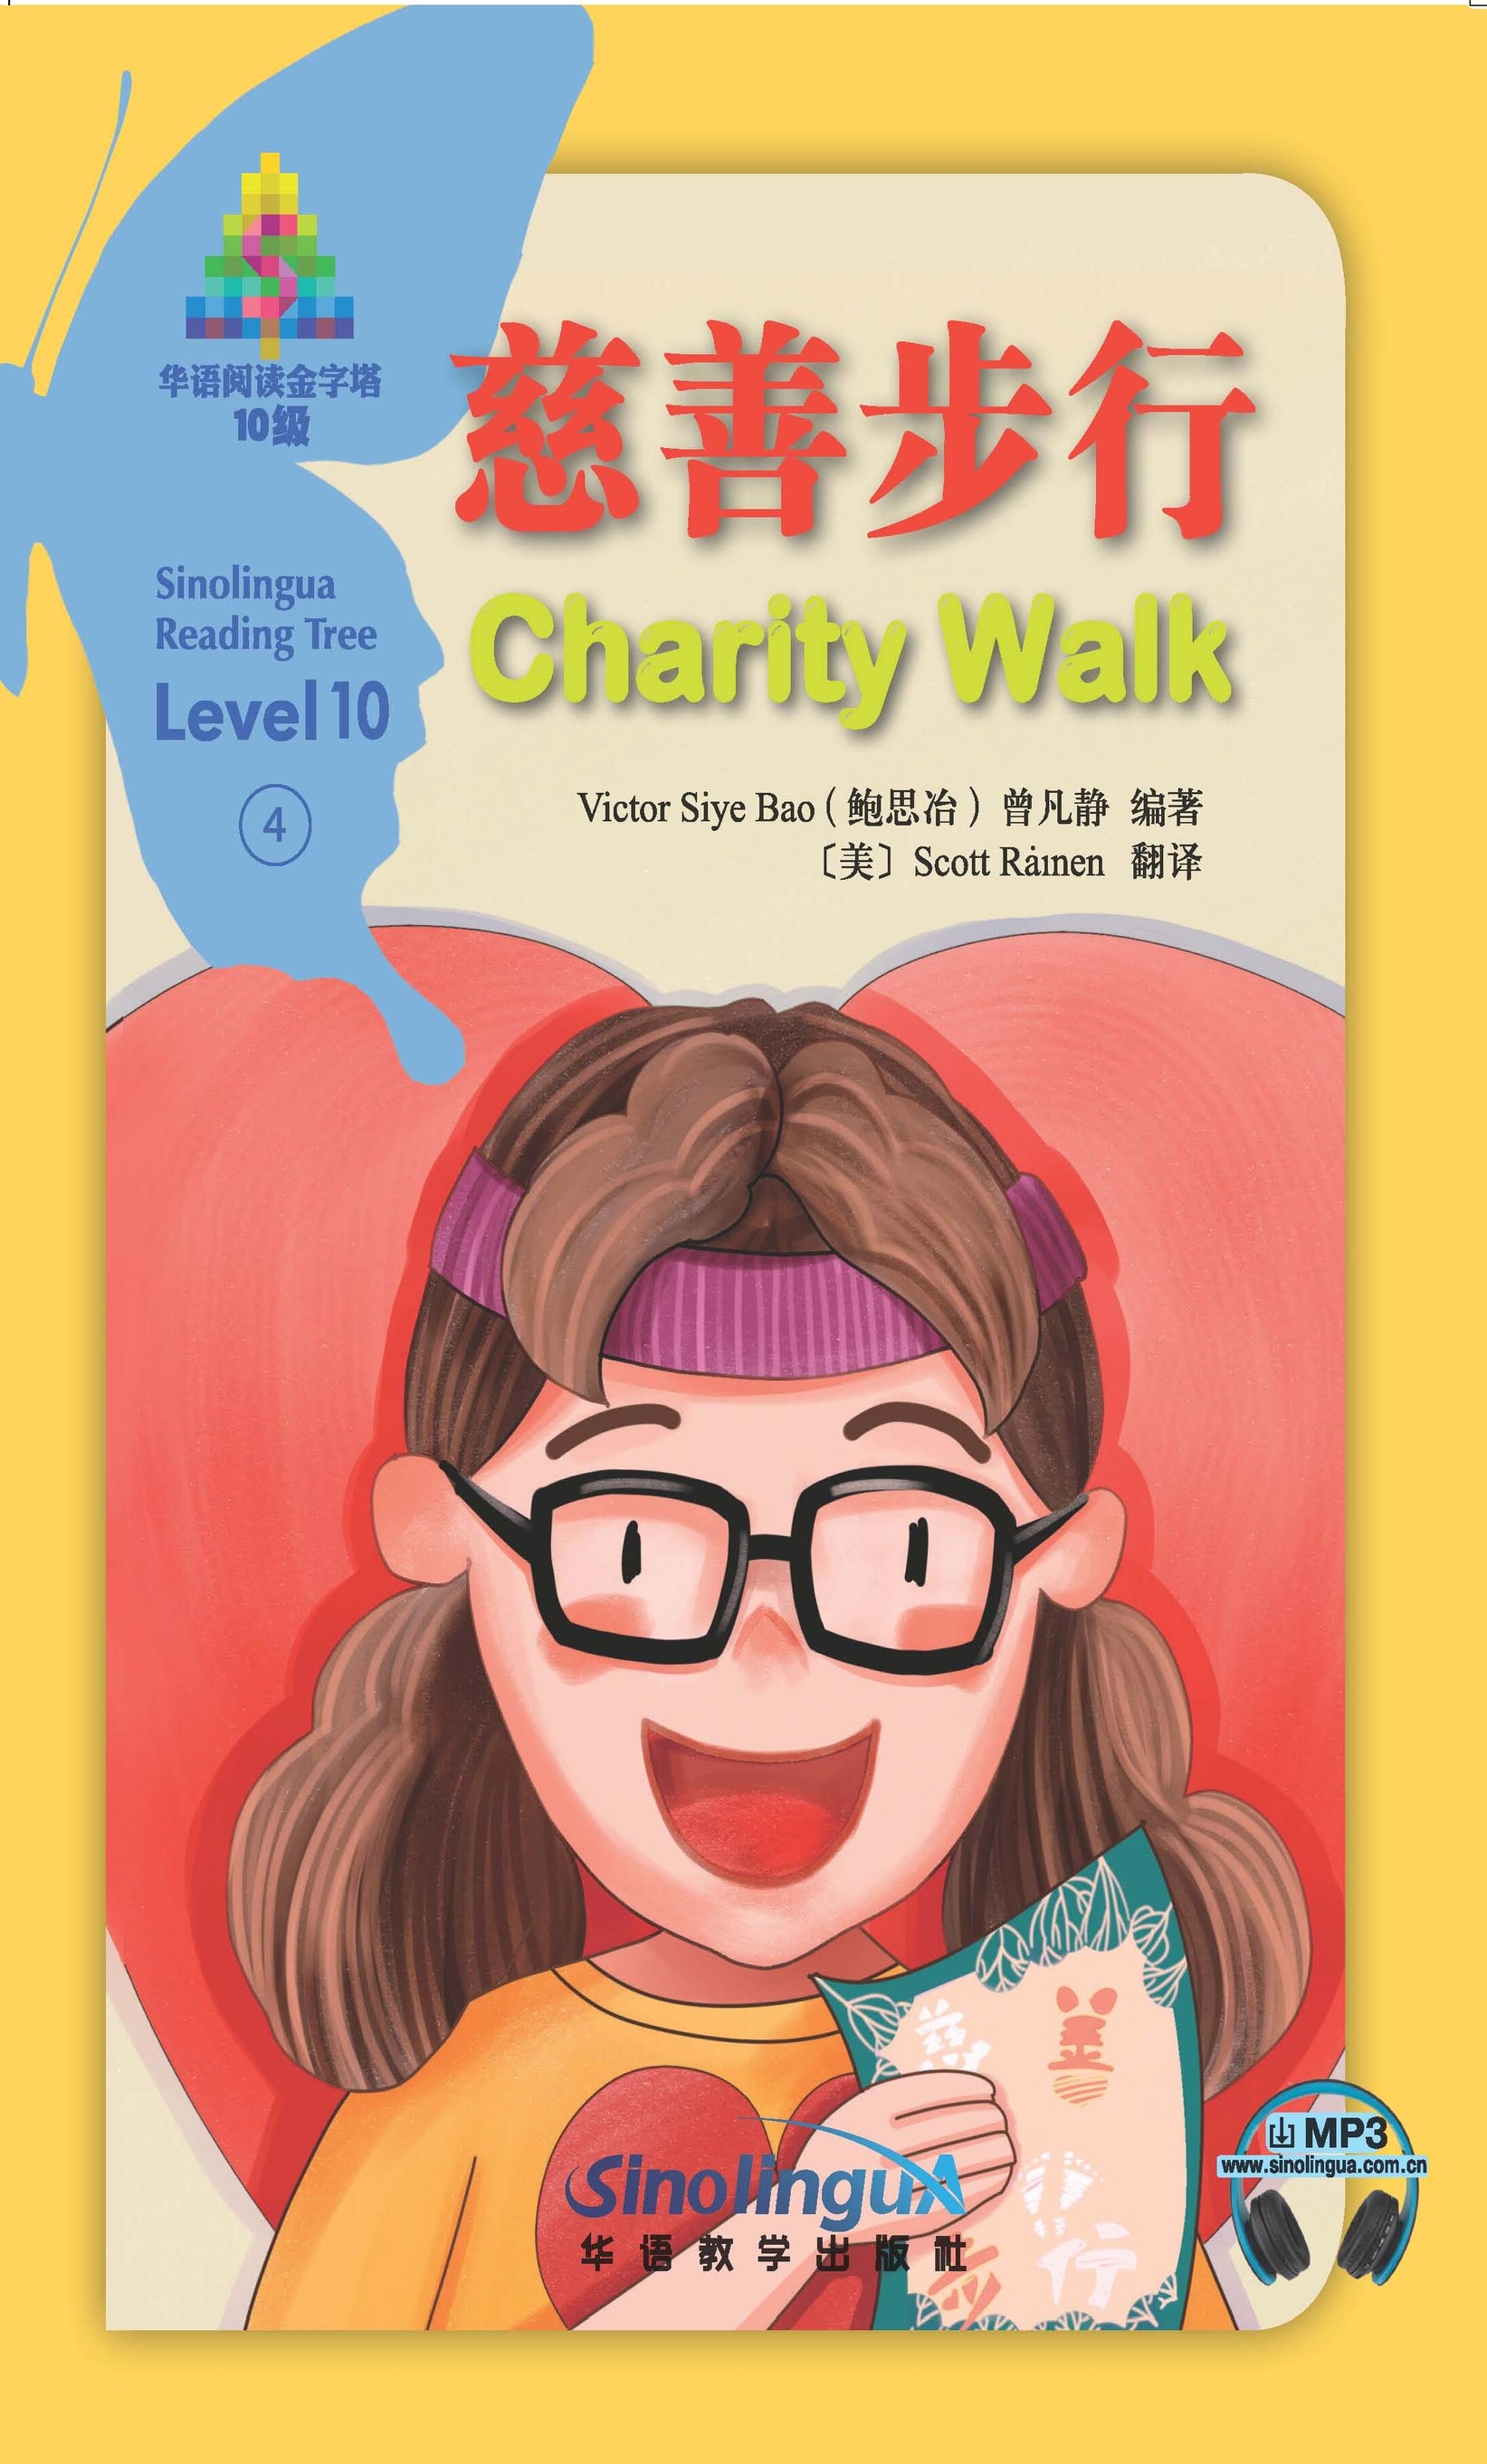 Sinolingua Reading Tree Level 10·4.Charity Walk